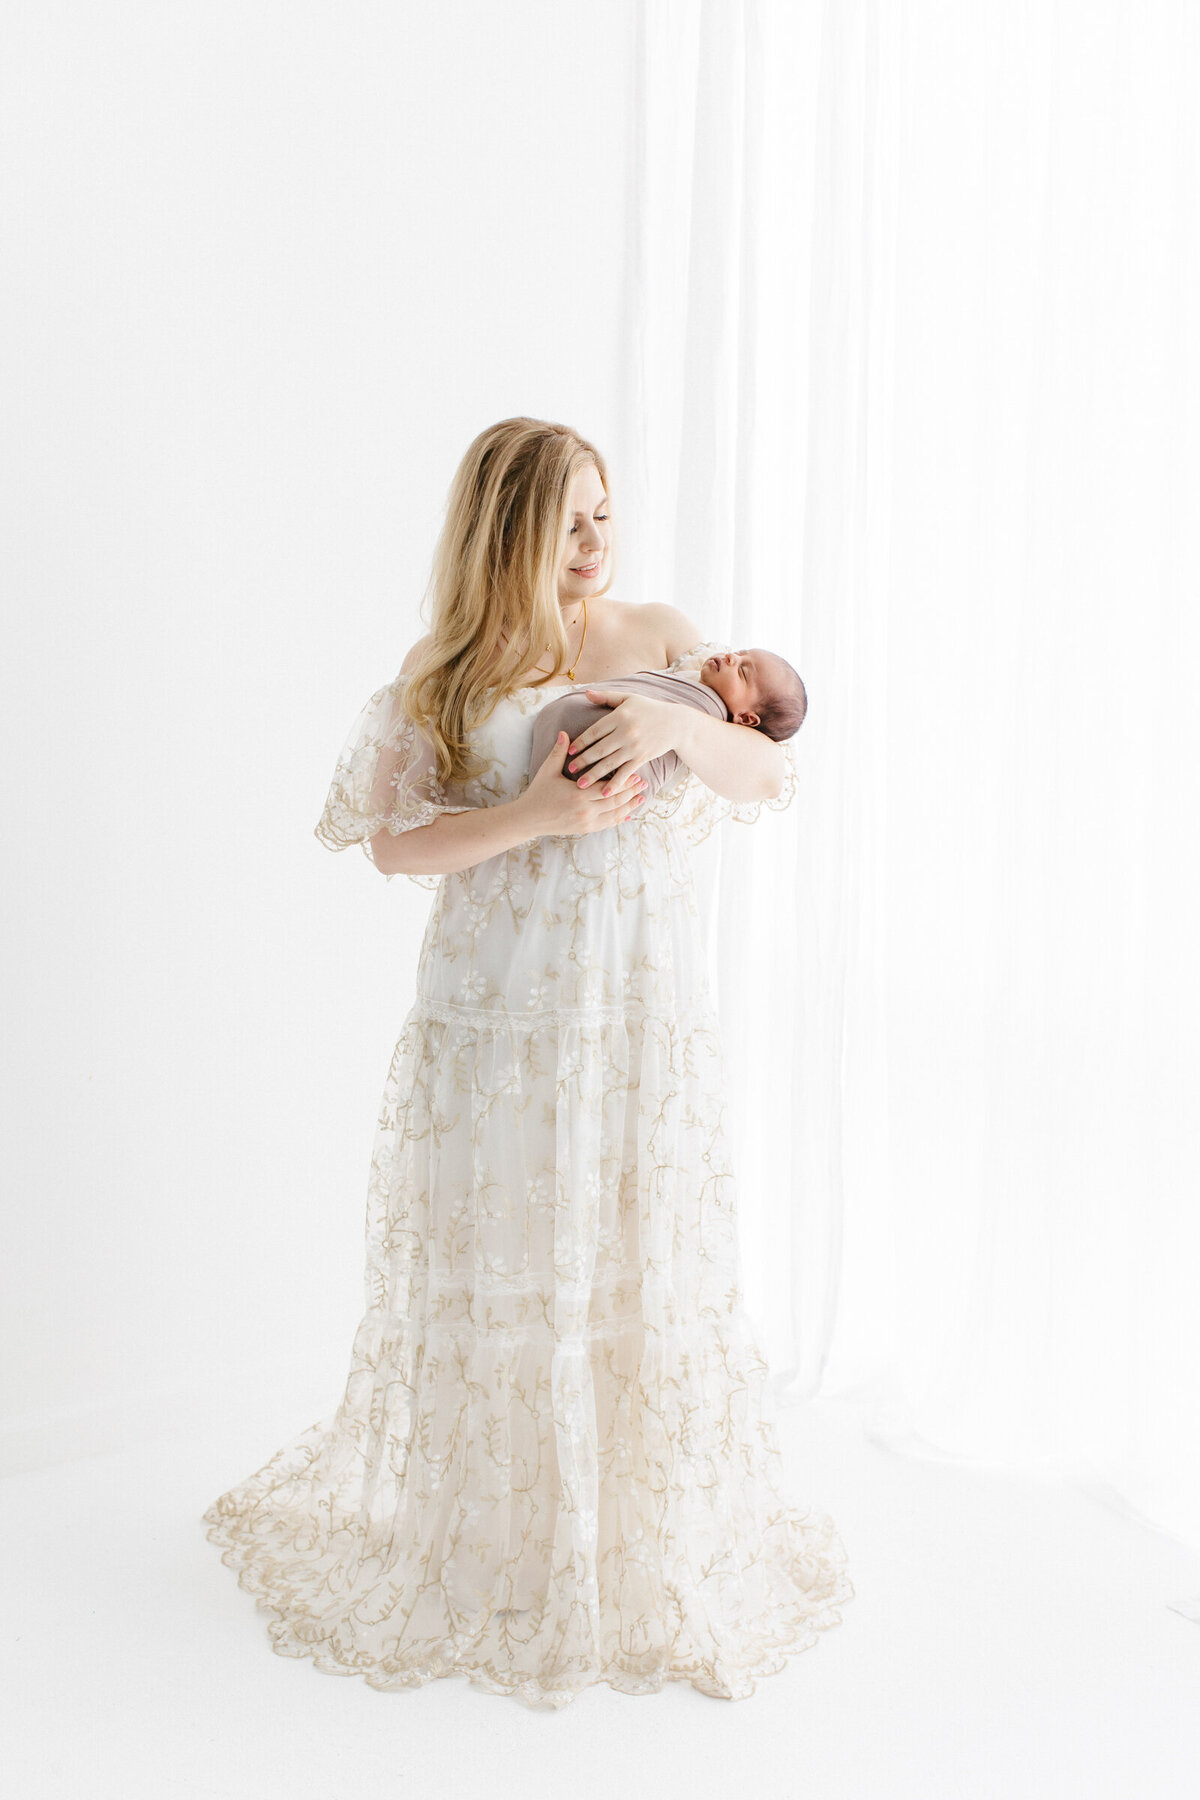 houston newborn photographer-238